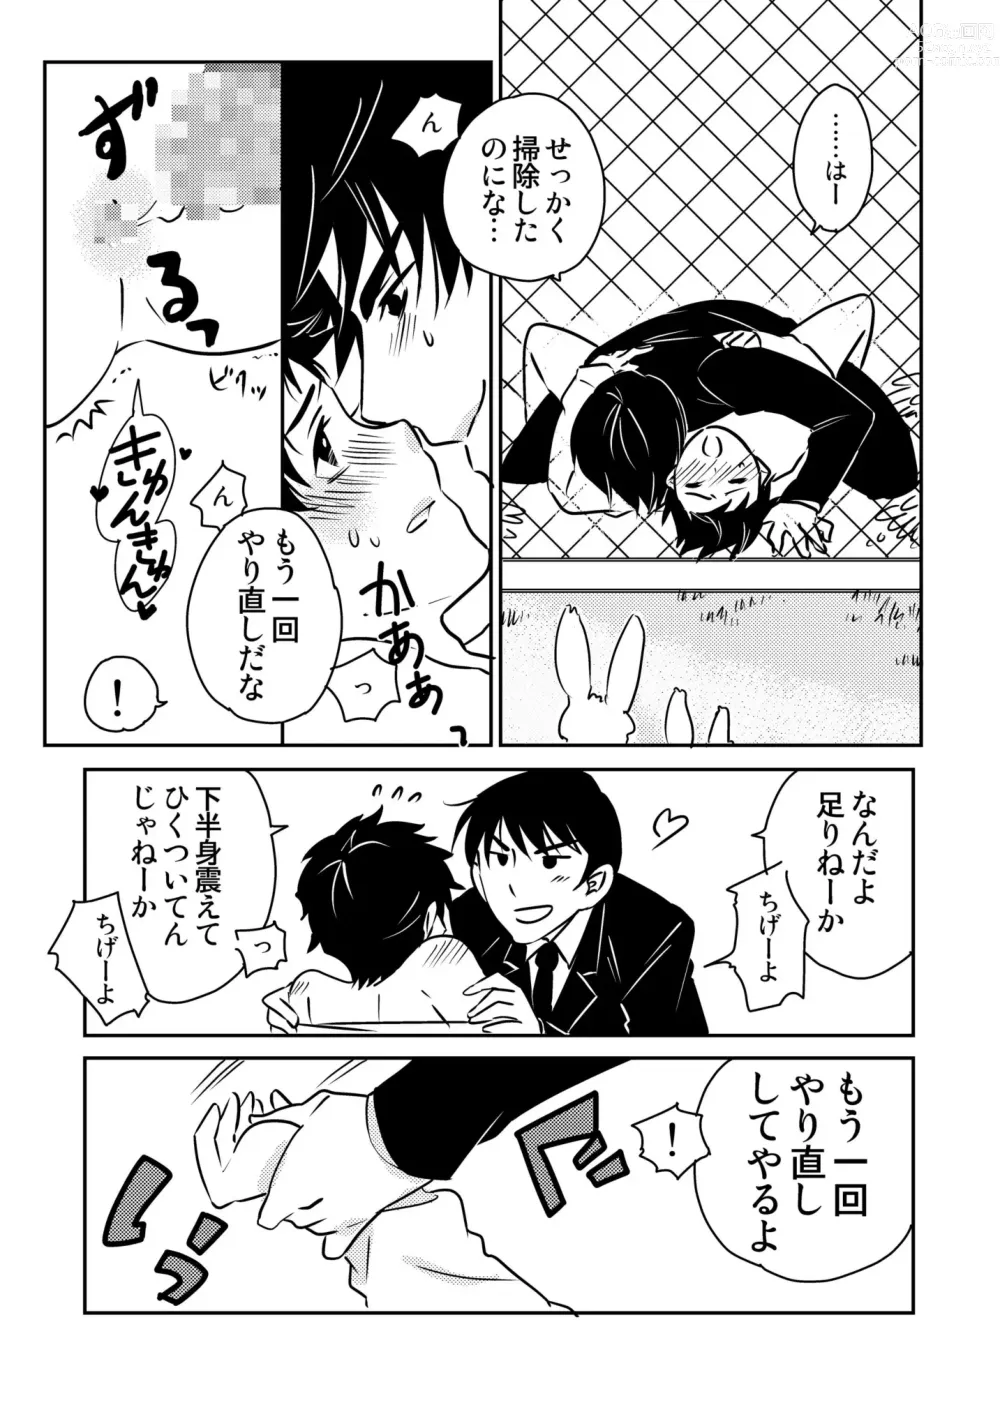 Page 13 of doujinshi Usagi no Koe 2